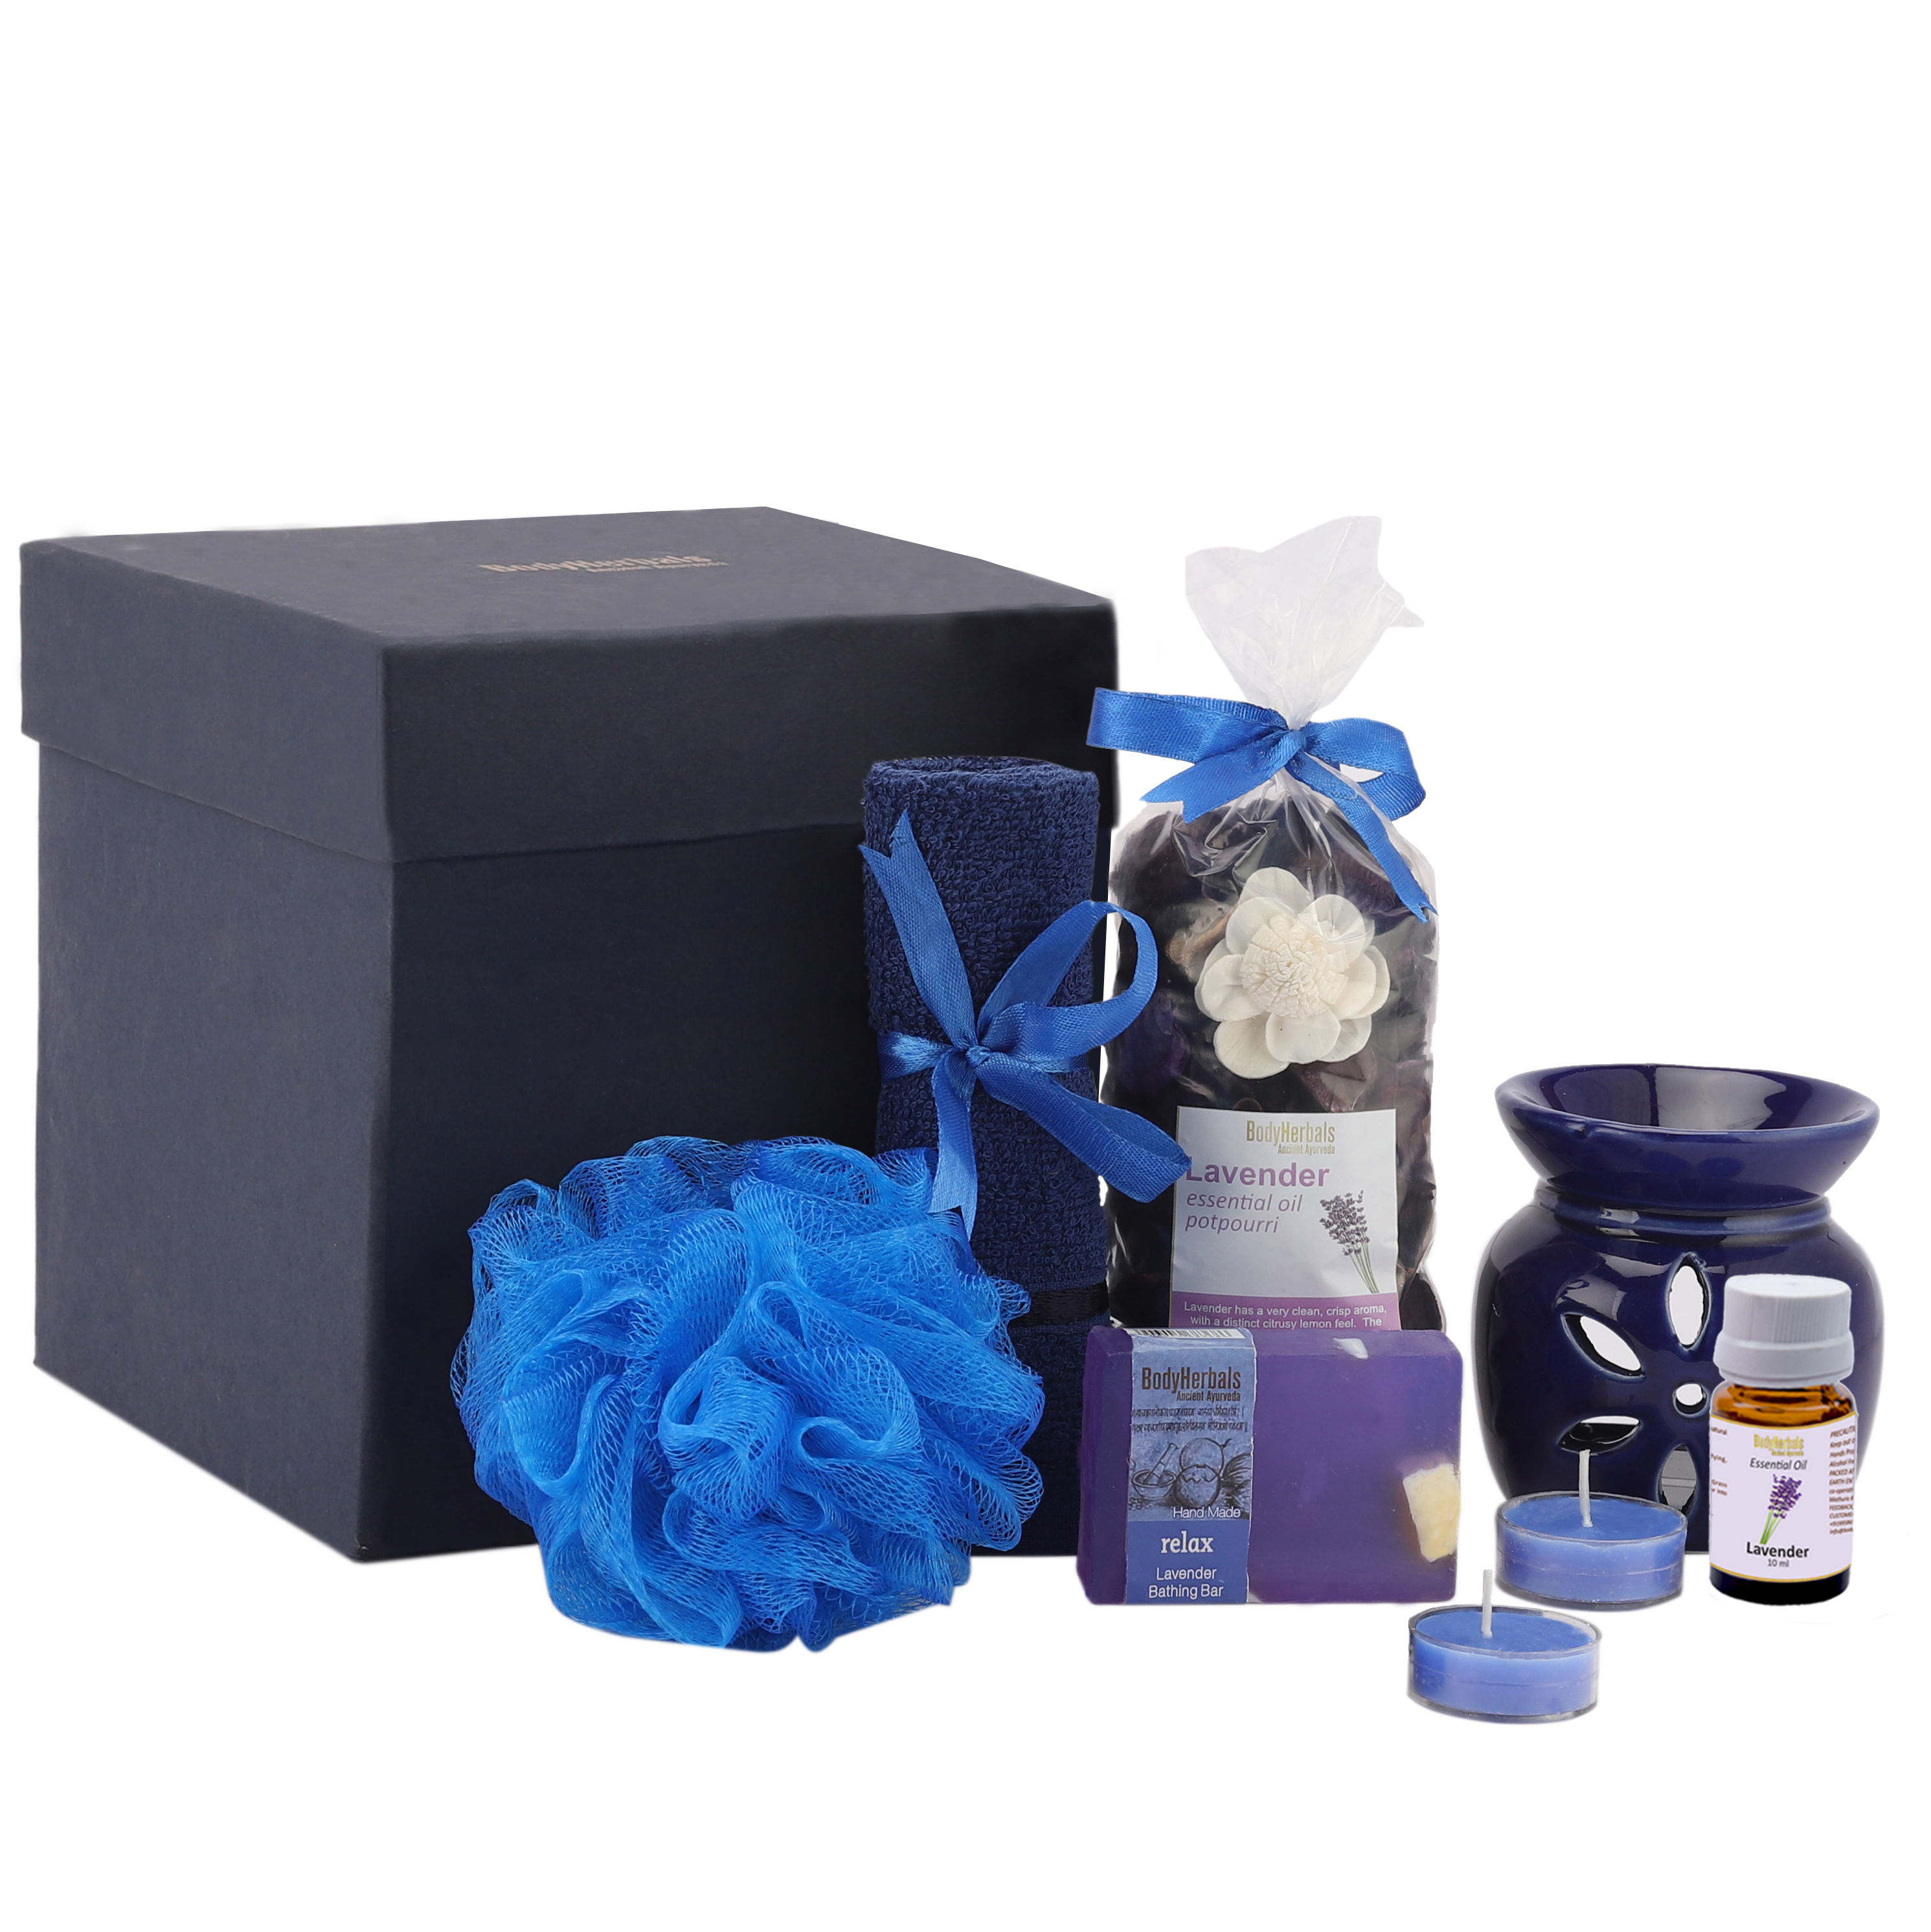 BodyHerbals Lavender Soap Spa Set Gift Box - Gift Sets & Combos for Women & Men